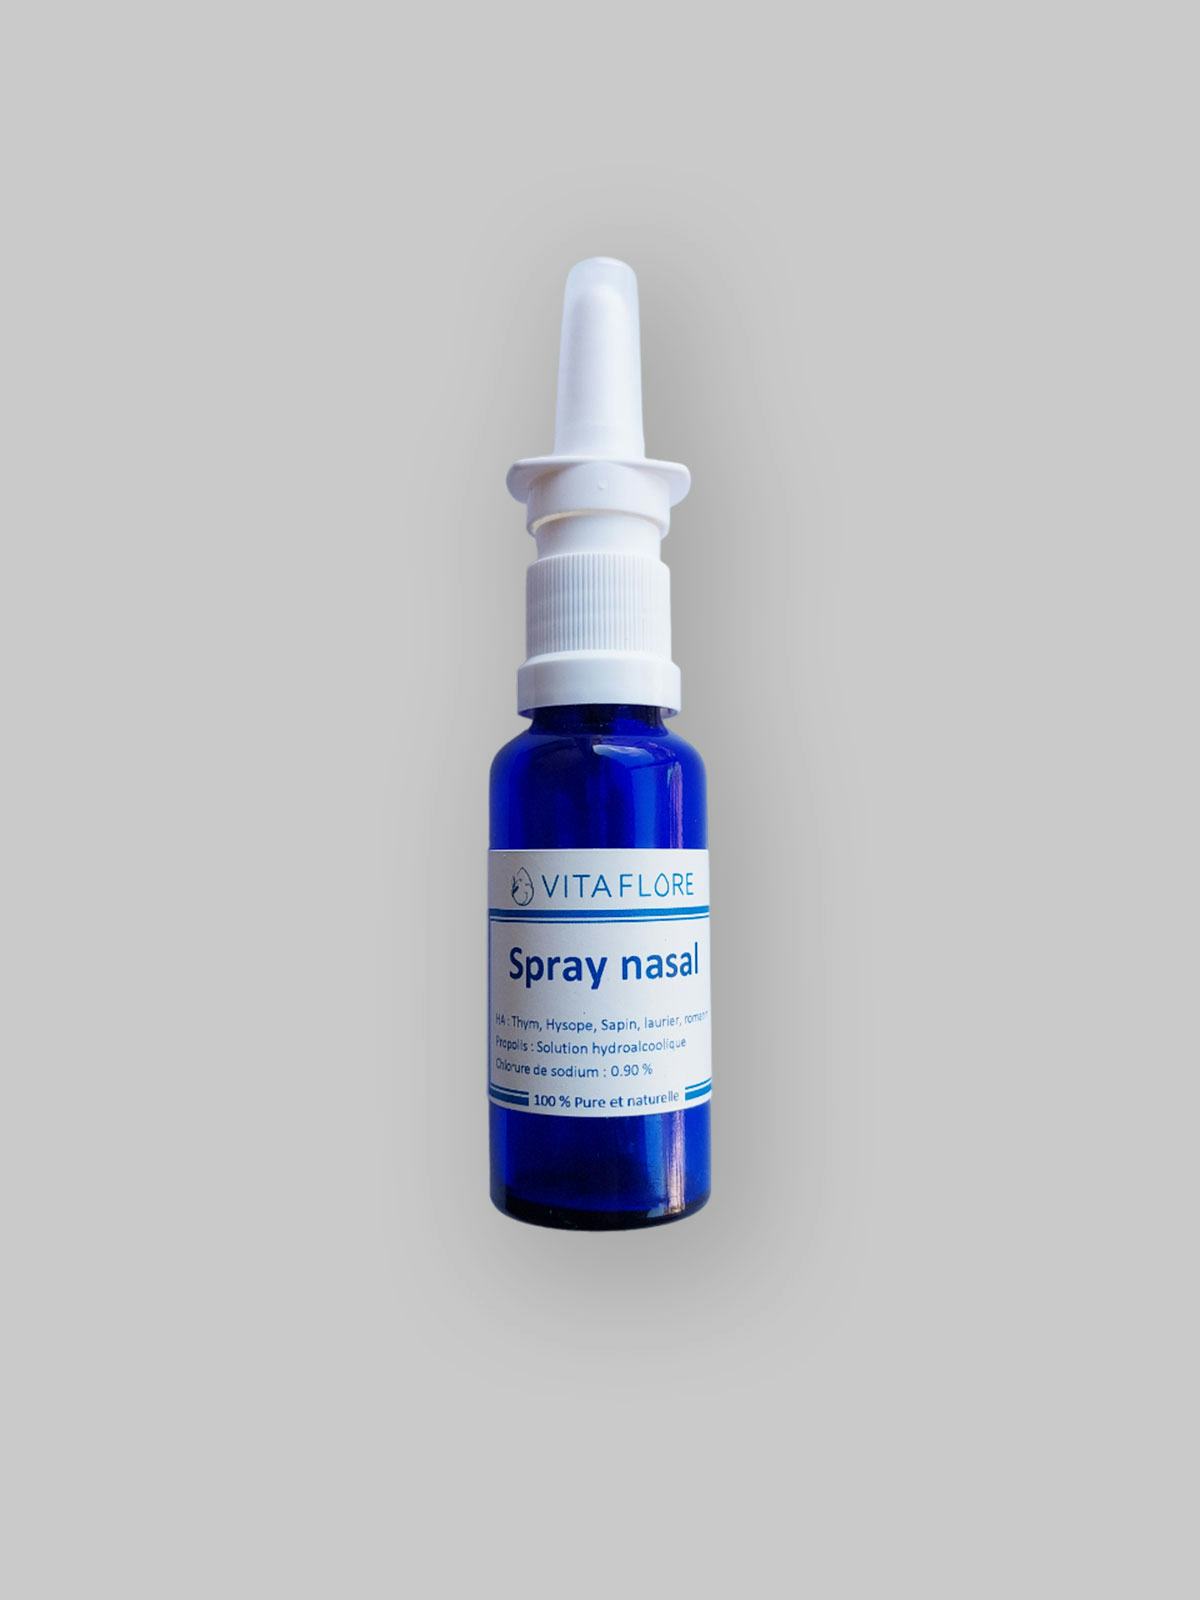 Spray nasal, produit artisanal en vente directe en Suisse